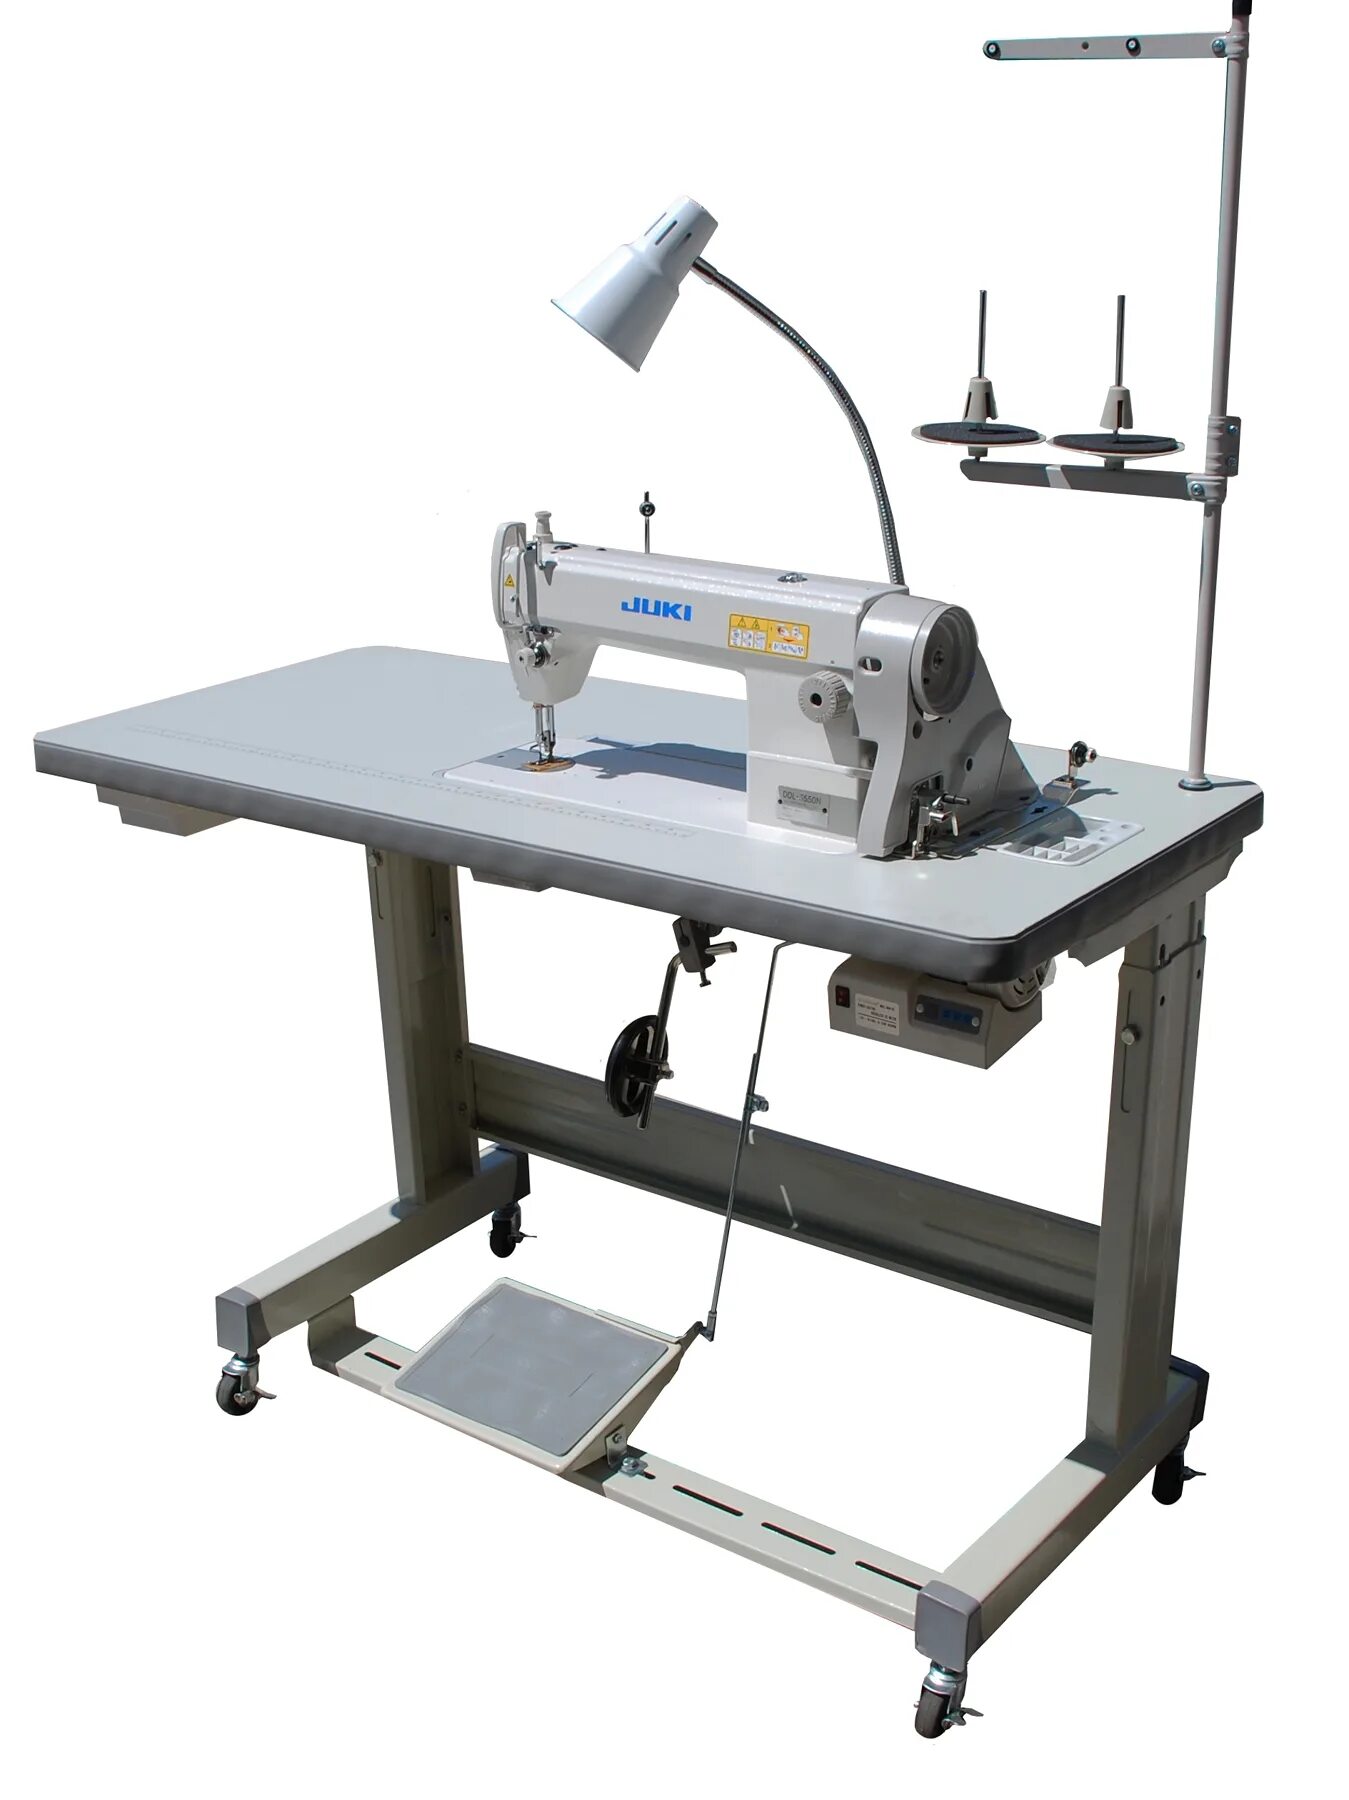 Juki швейная машина JK-8500. Промышленная швейная машина Juki со столом. Машинка производственная Jack 5550. Стол для Juki DDL-8700.